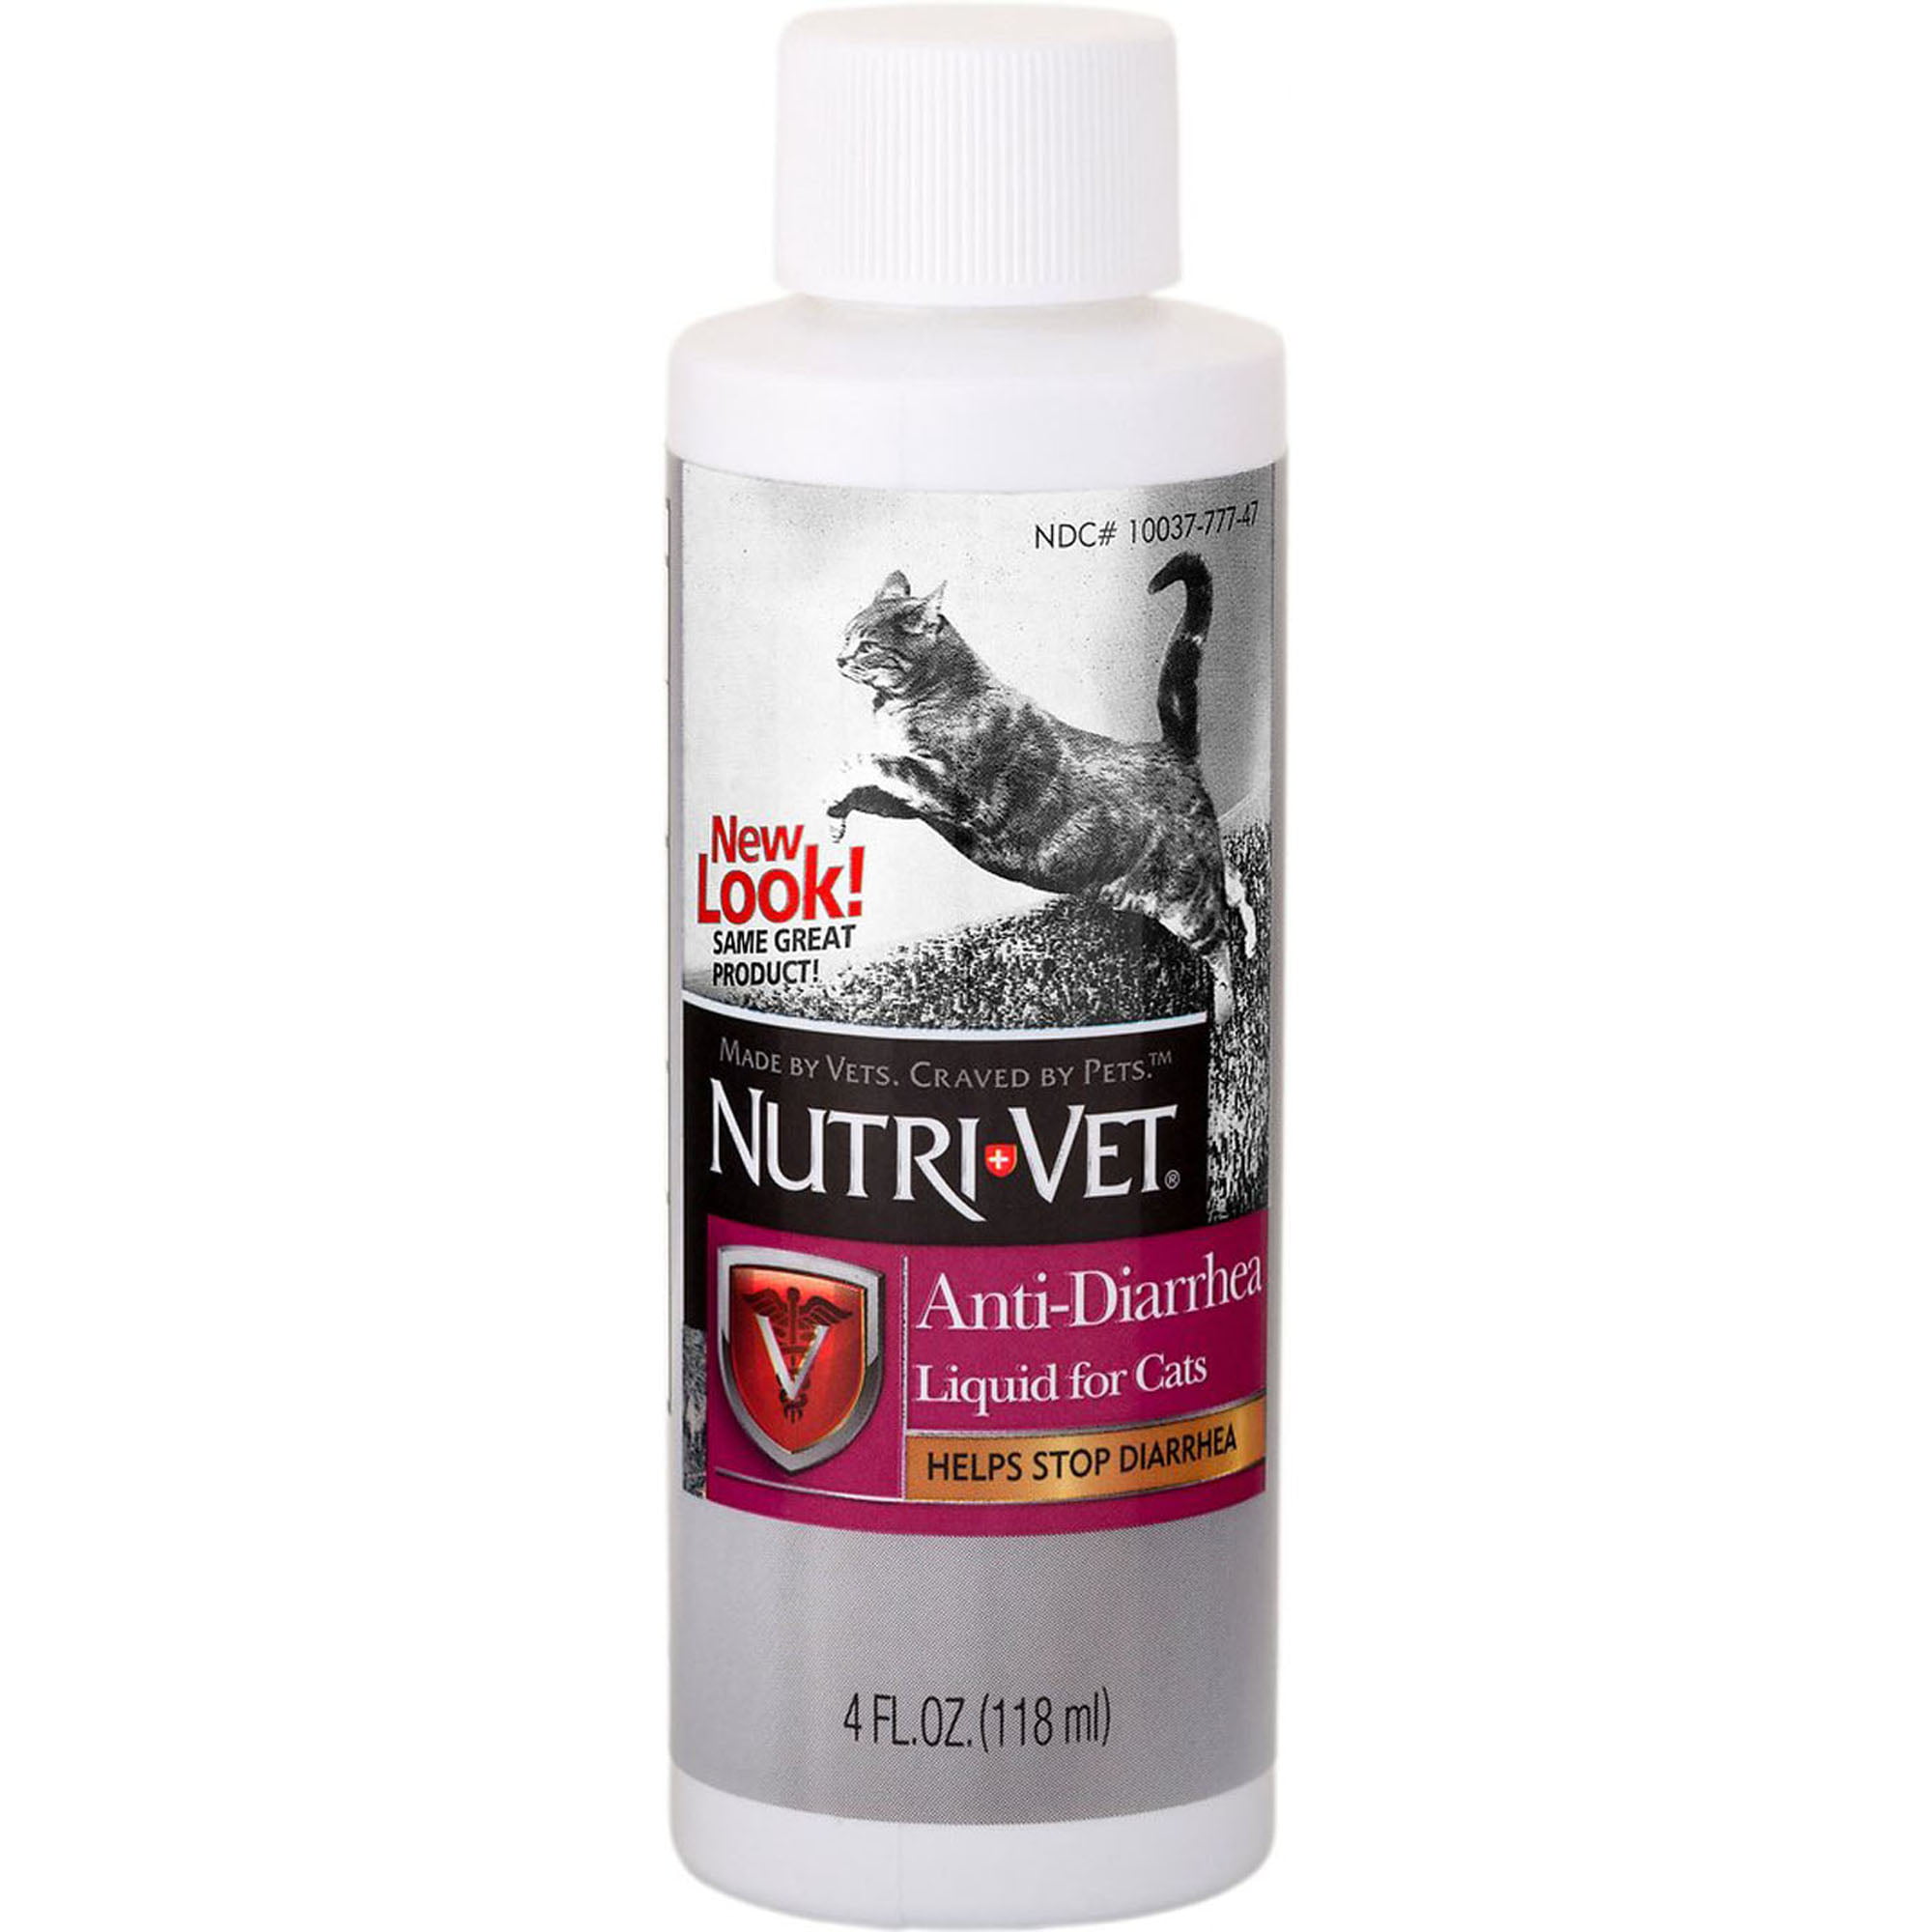 Cat Anti Diarrhea Made in USA Helps Stop Diarrhea 4 oz from Nutrivet